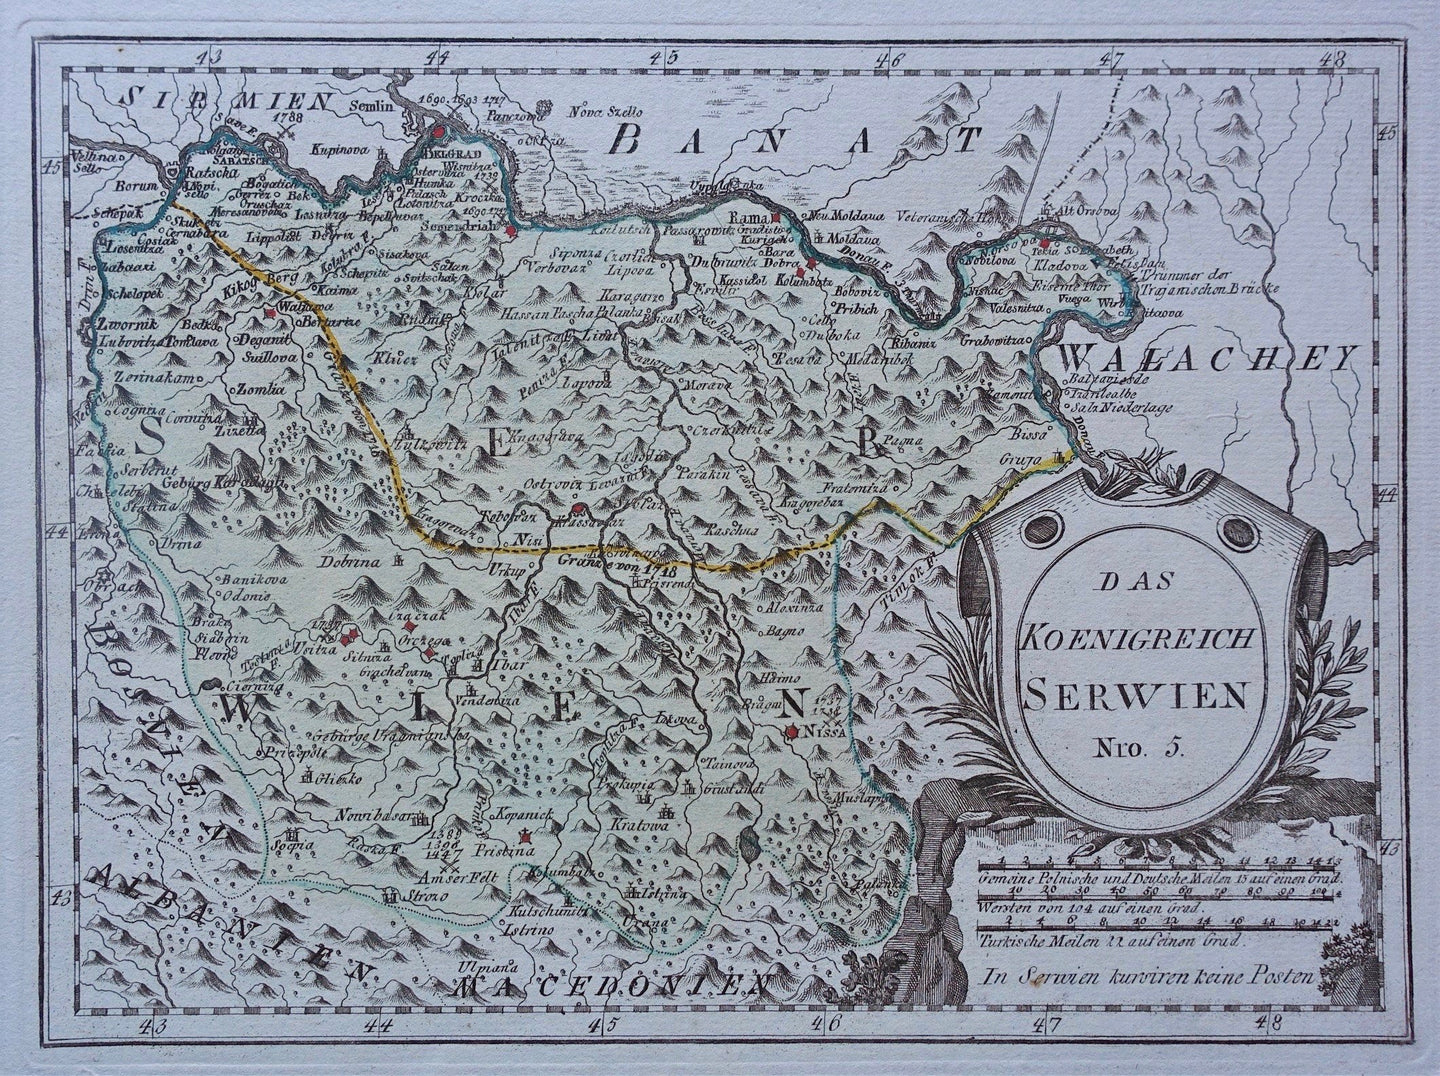 Servië Serbia Kosovo - FJJ von Reilly - 1790